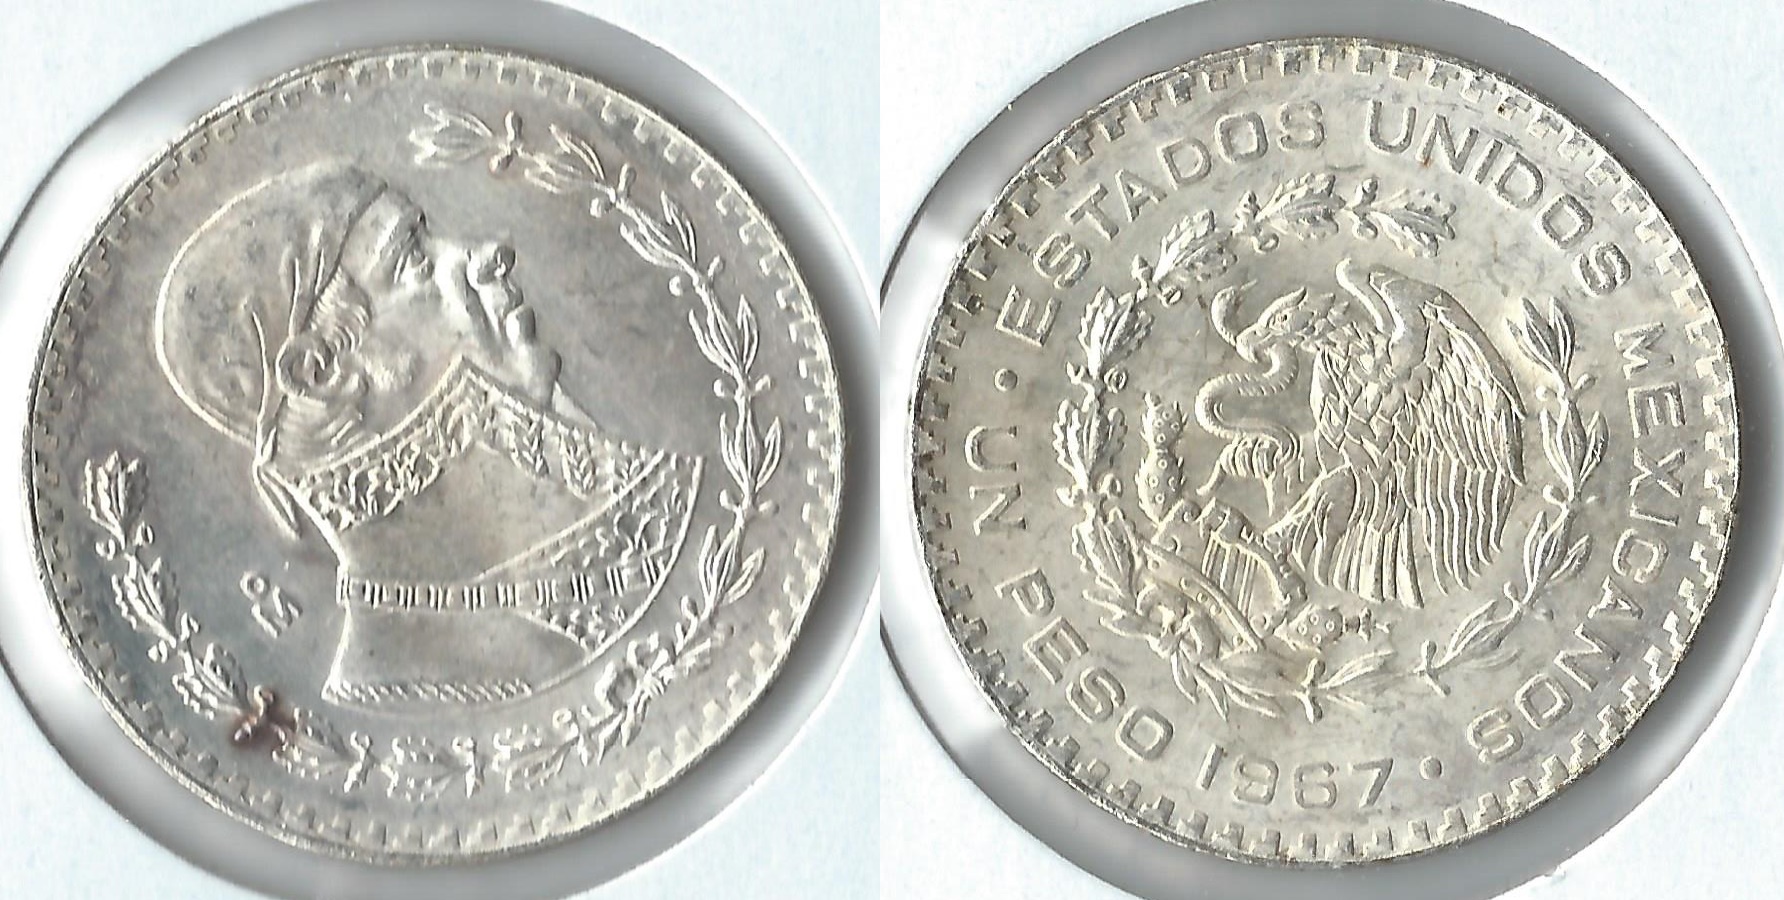 1967 mexico 1 peso.jpg